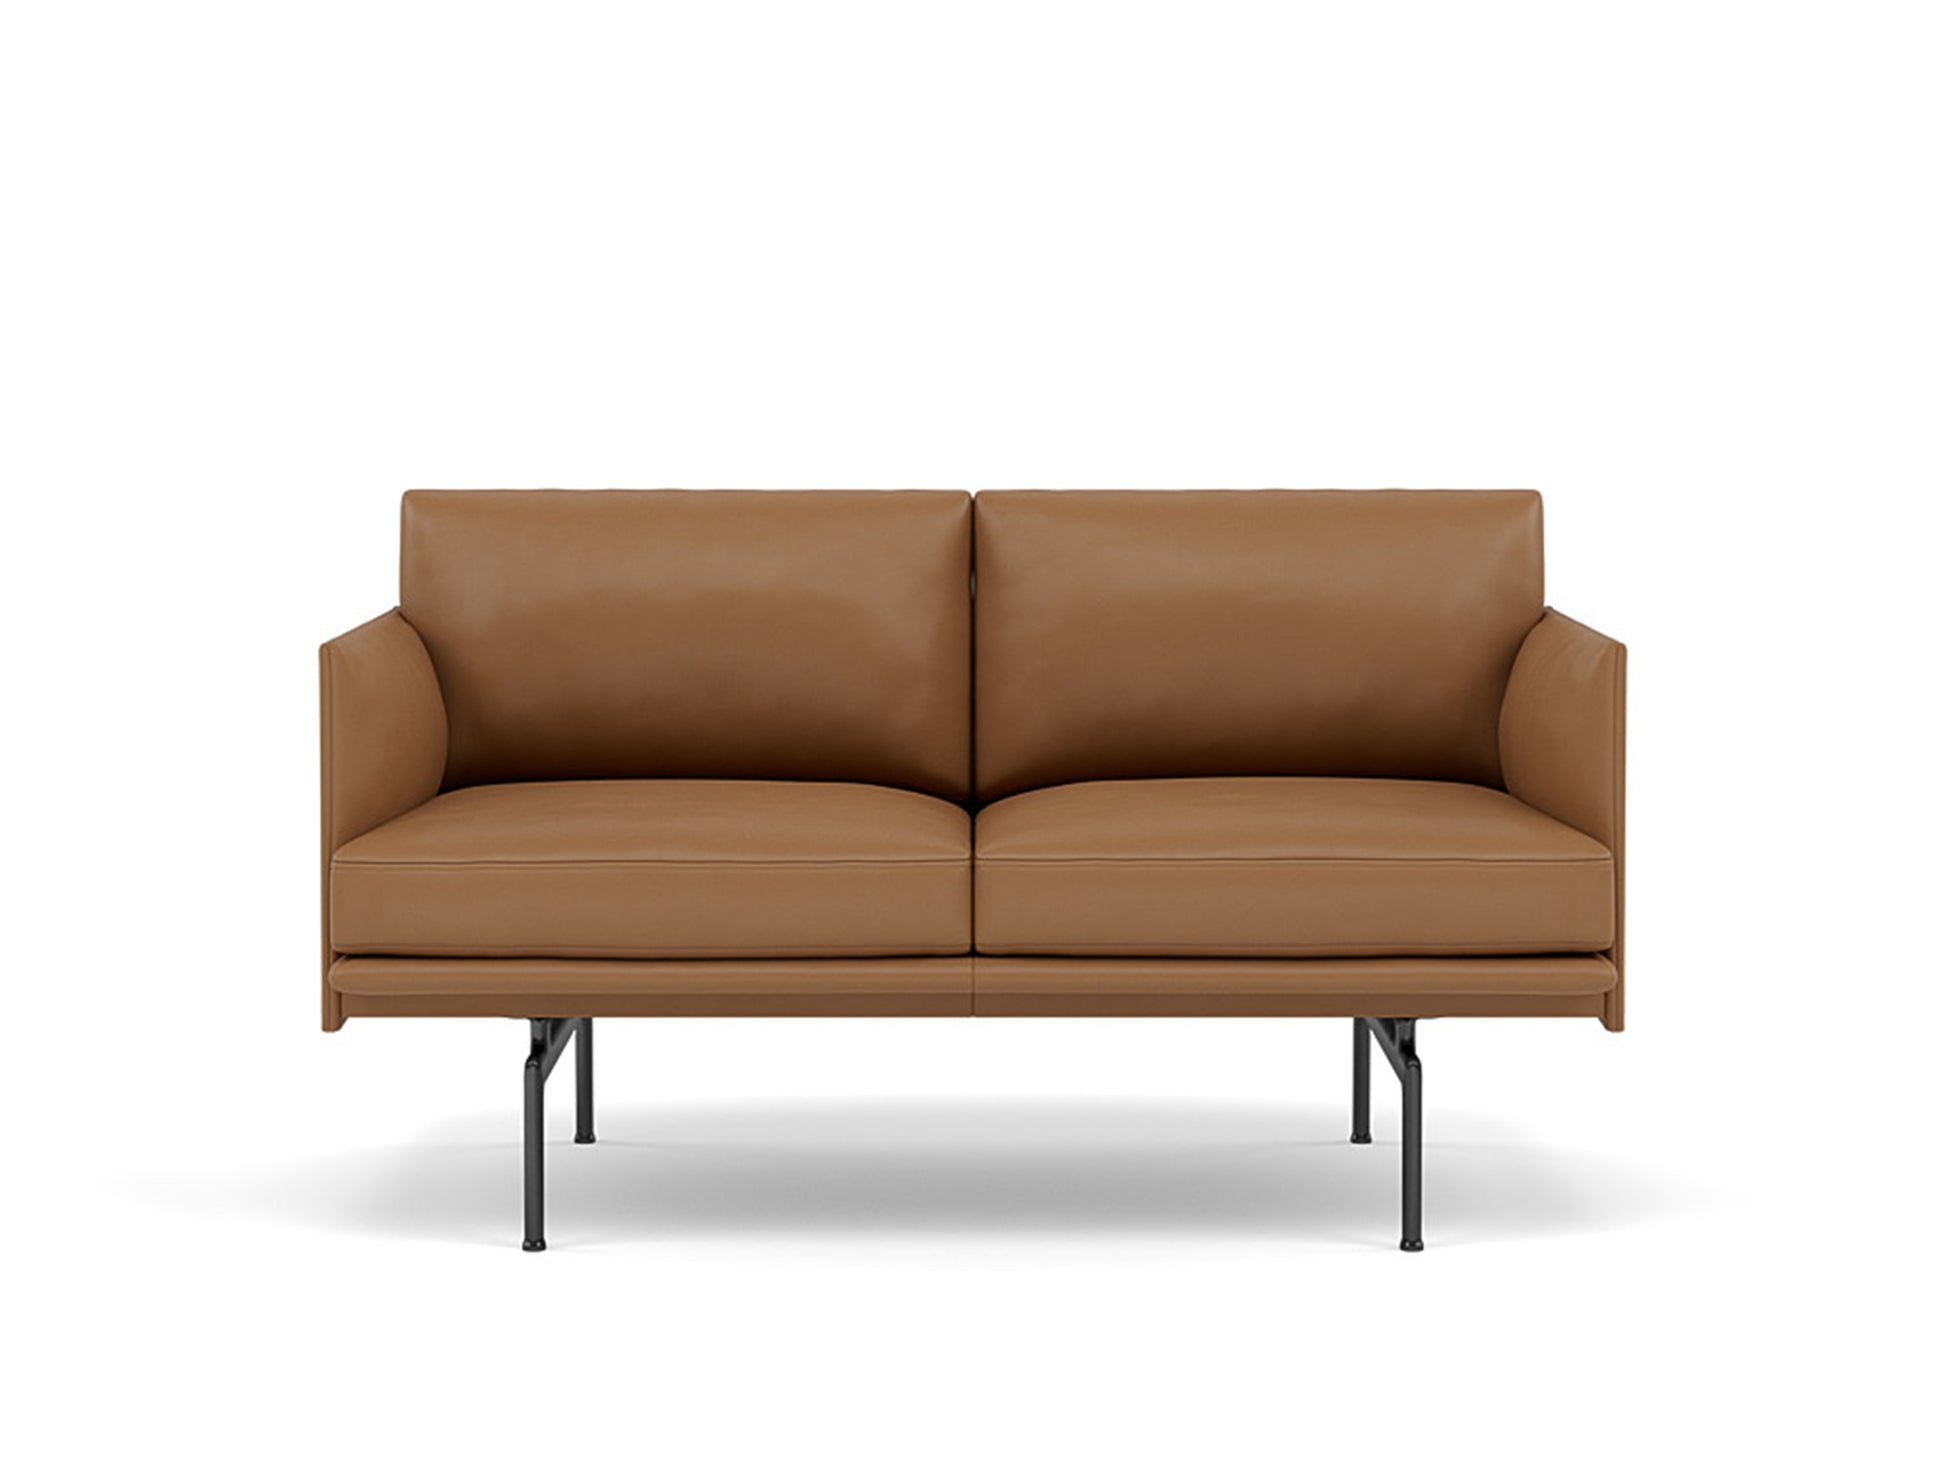 Outline Studio Sofa by Muuto / cognac leather 